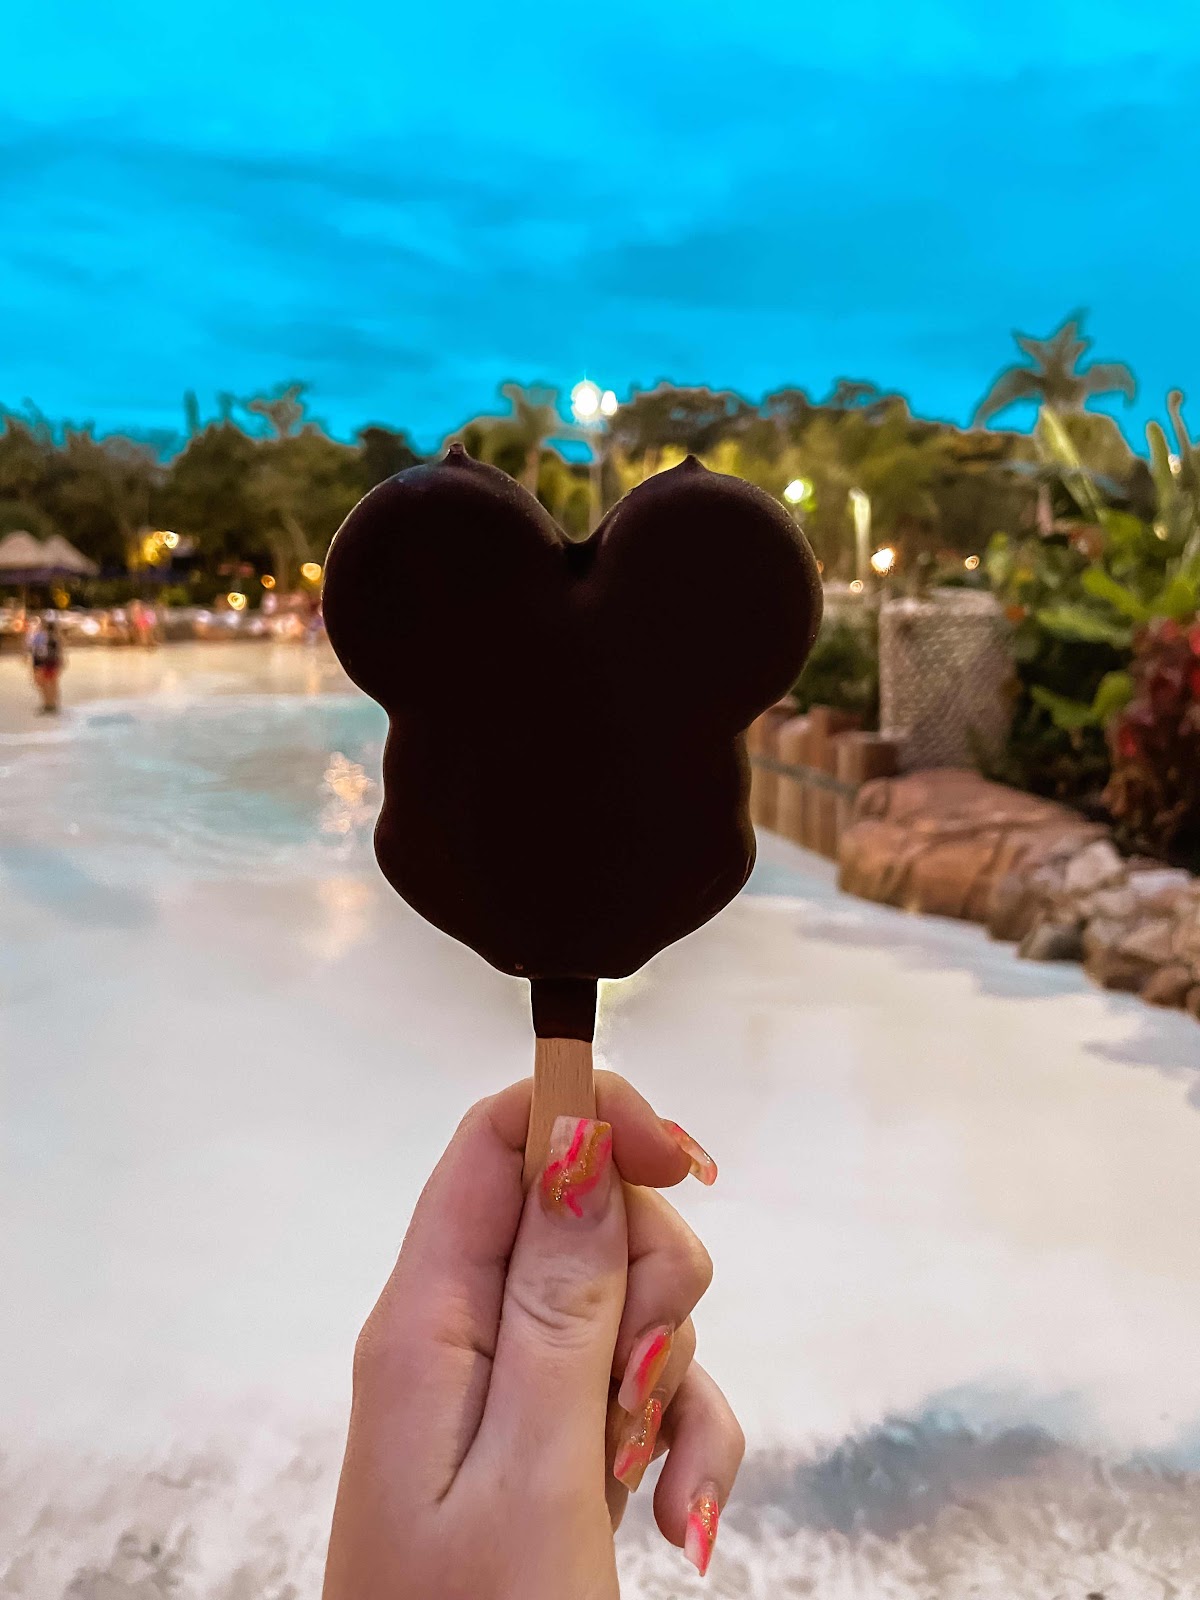 Mickey’s premium ice cream bar